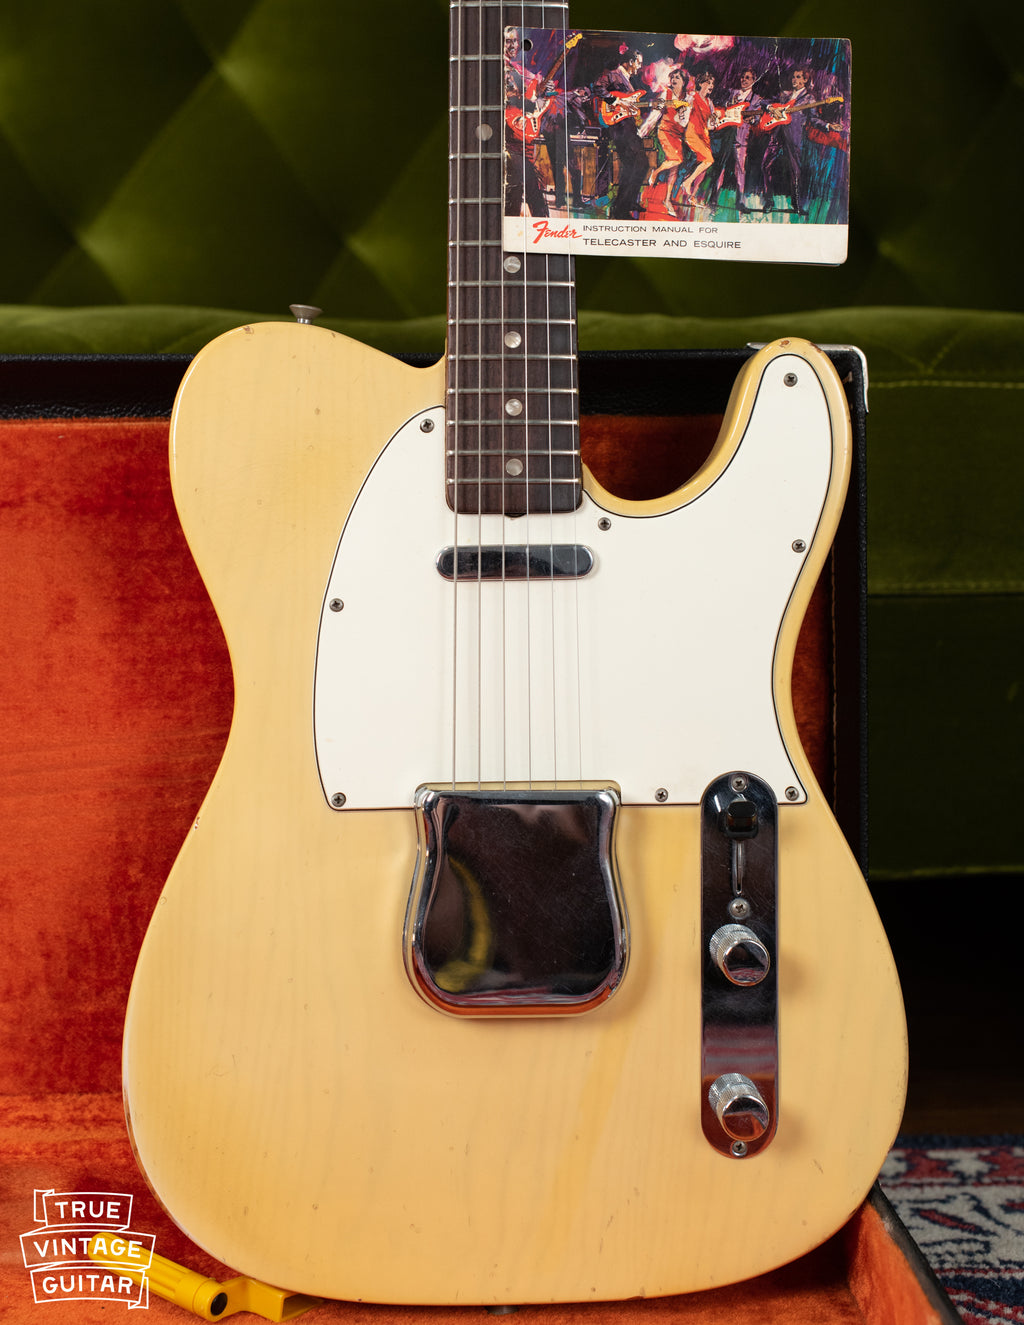 1968 Fender Telecaster electric guitar